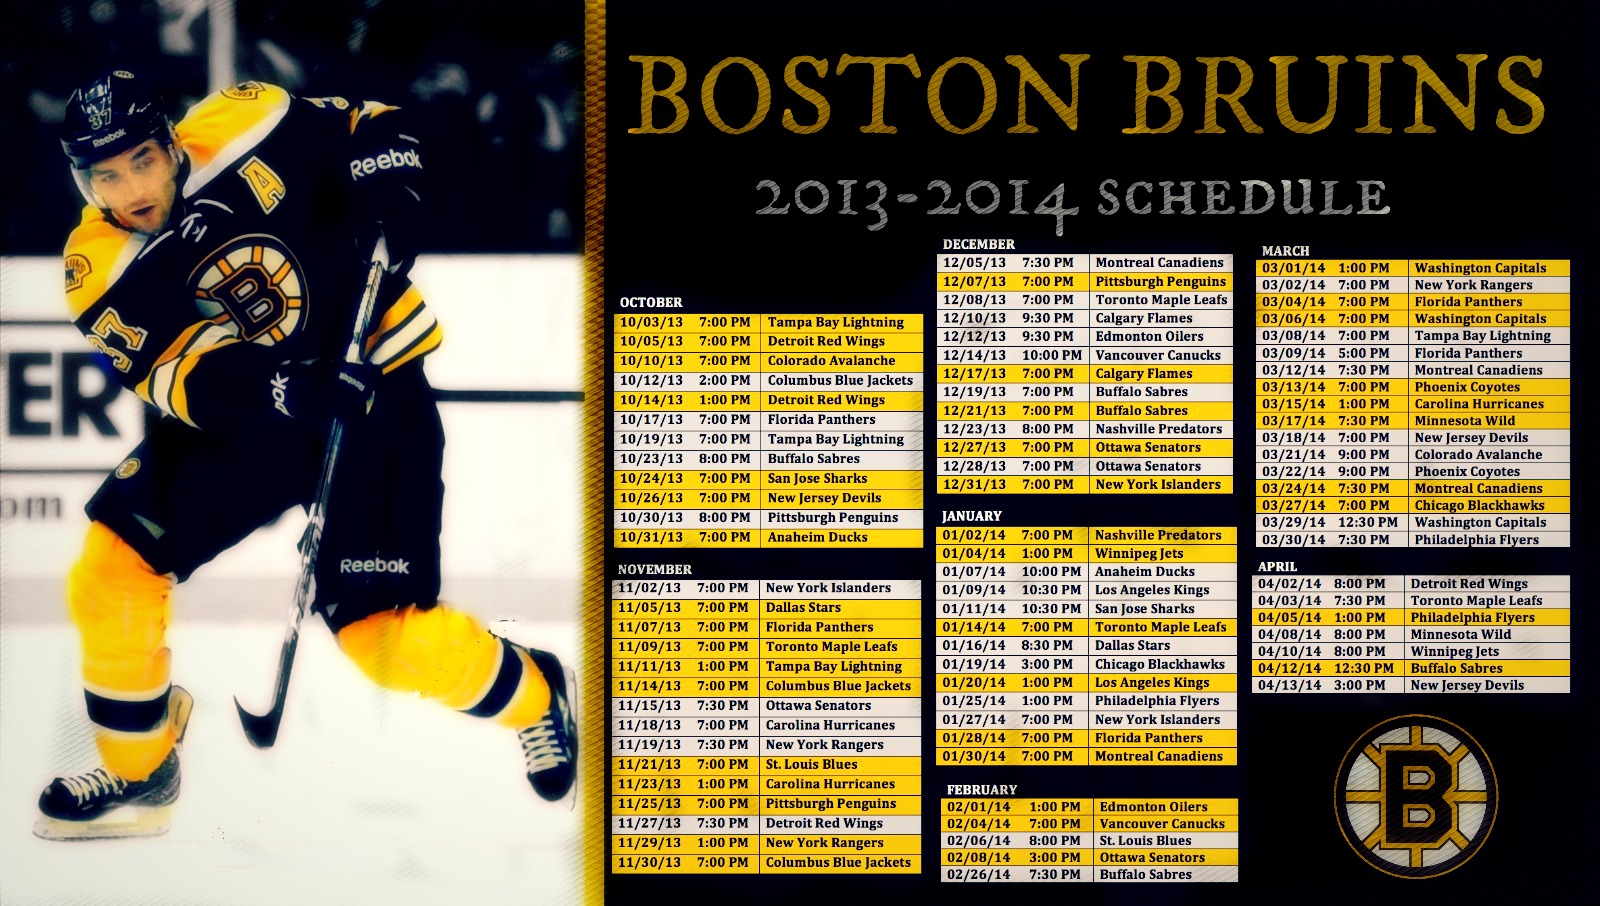 Boston Bruins 2013 2014 Schedule Desktop Wallpapermade by me feel